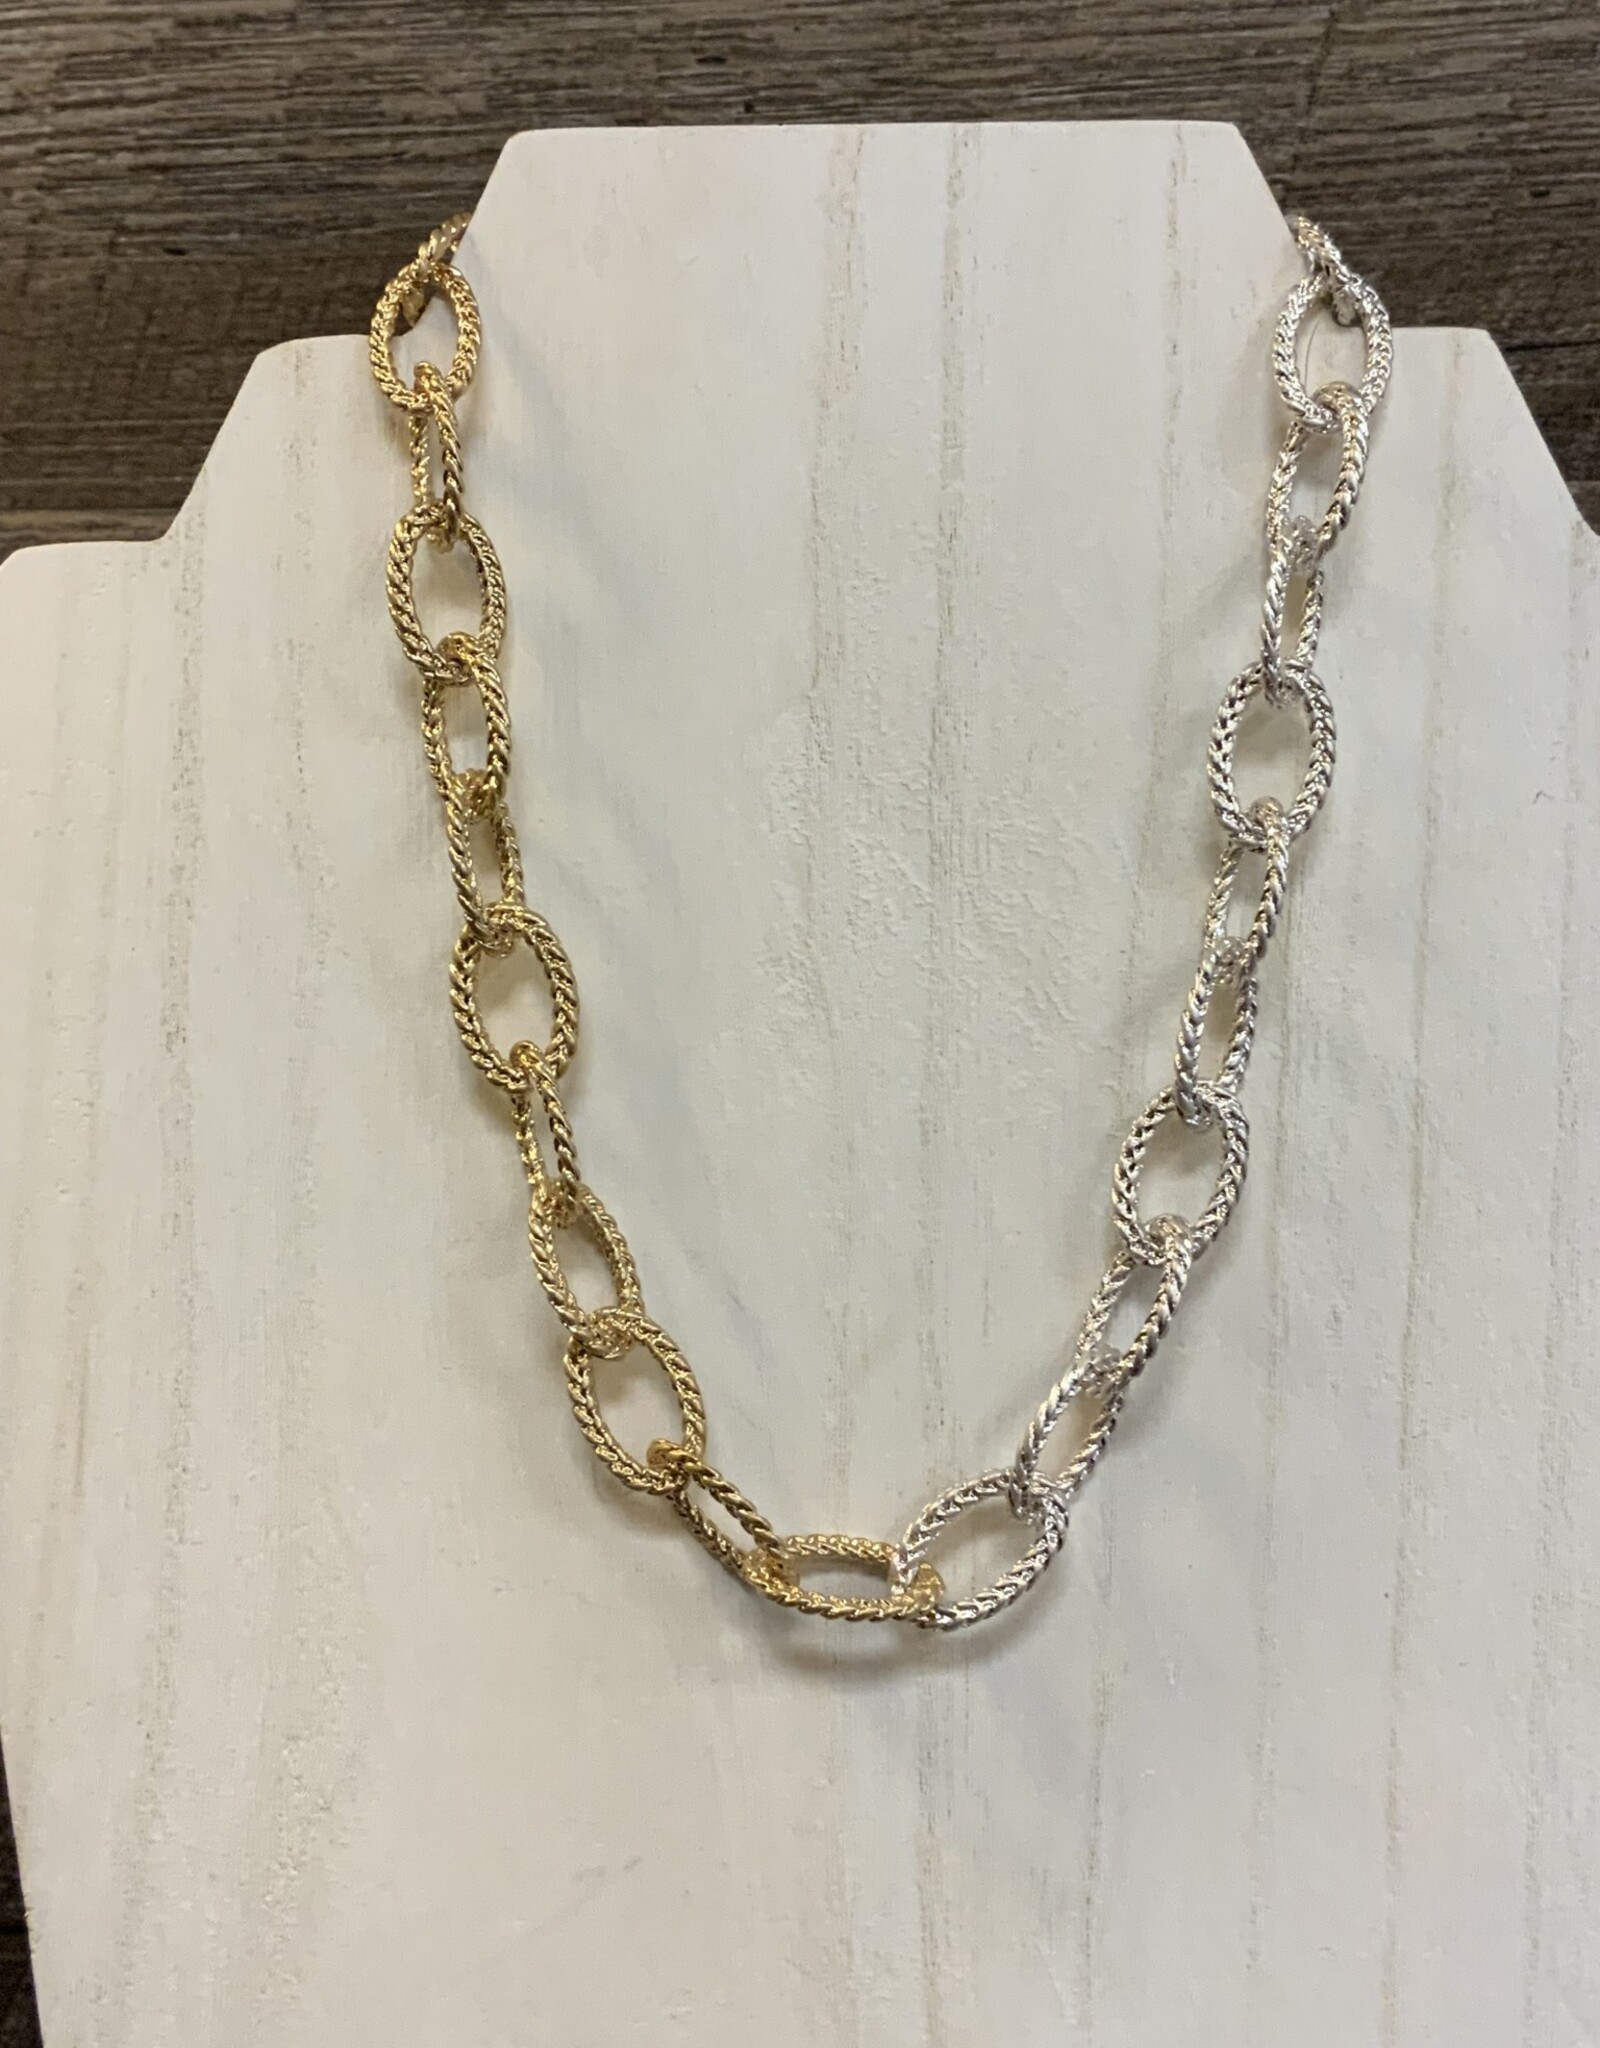 Gold/Silver Braded Loop Links Adjustable Necklace